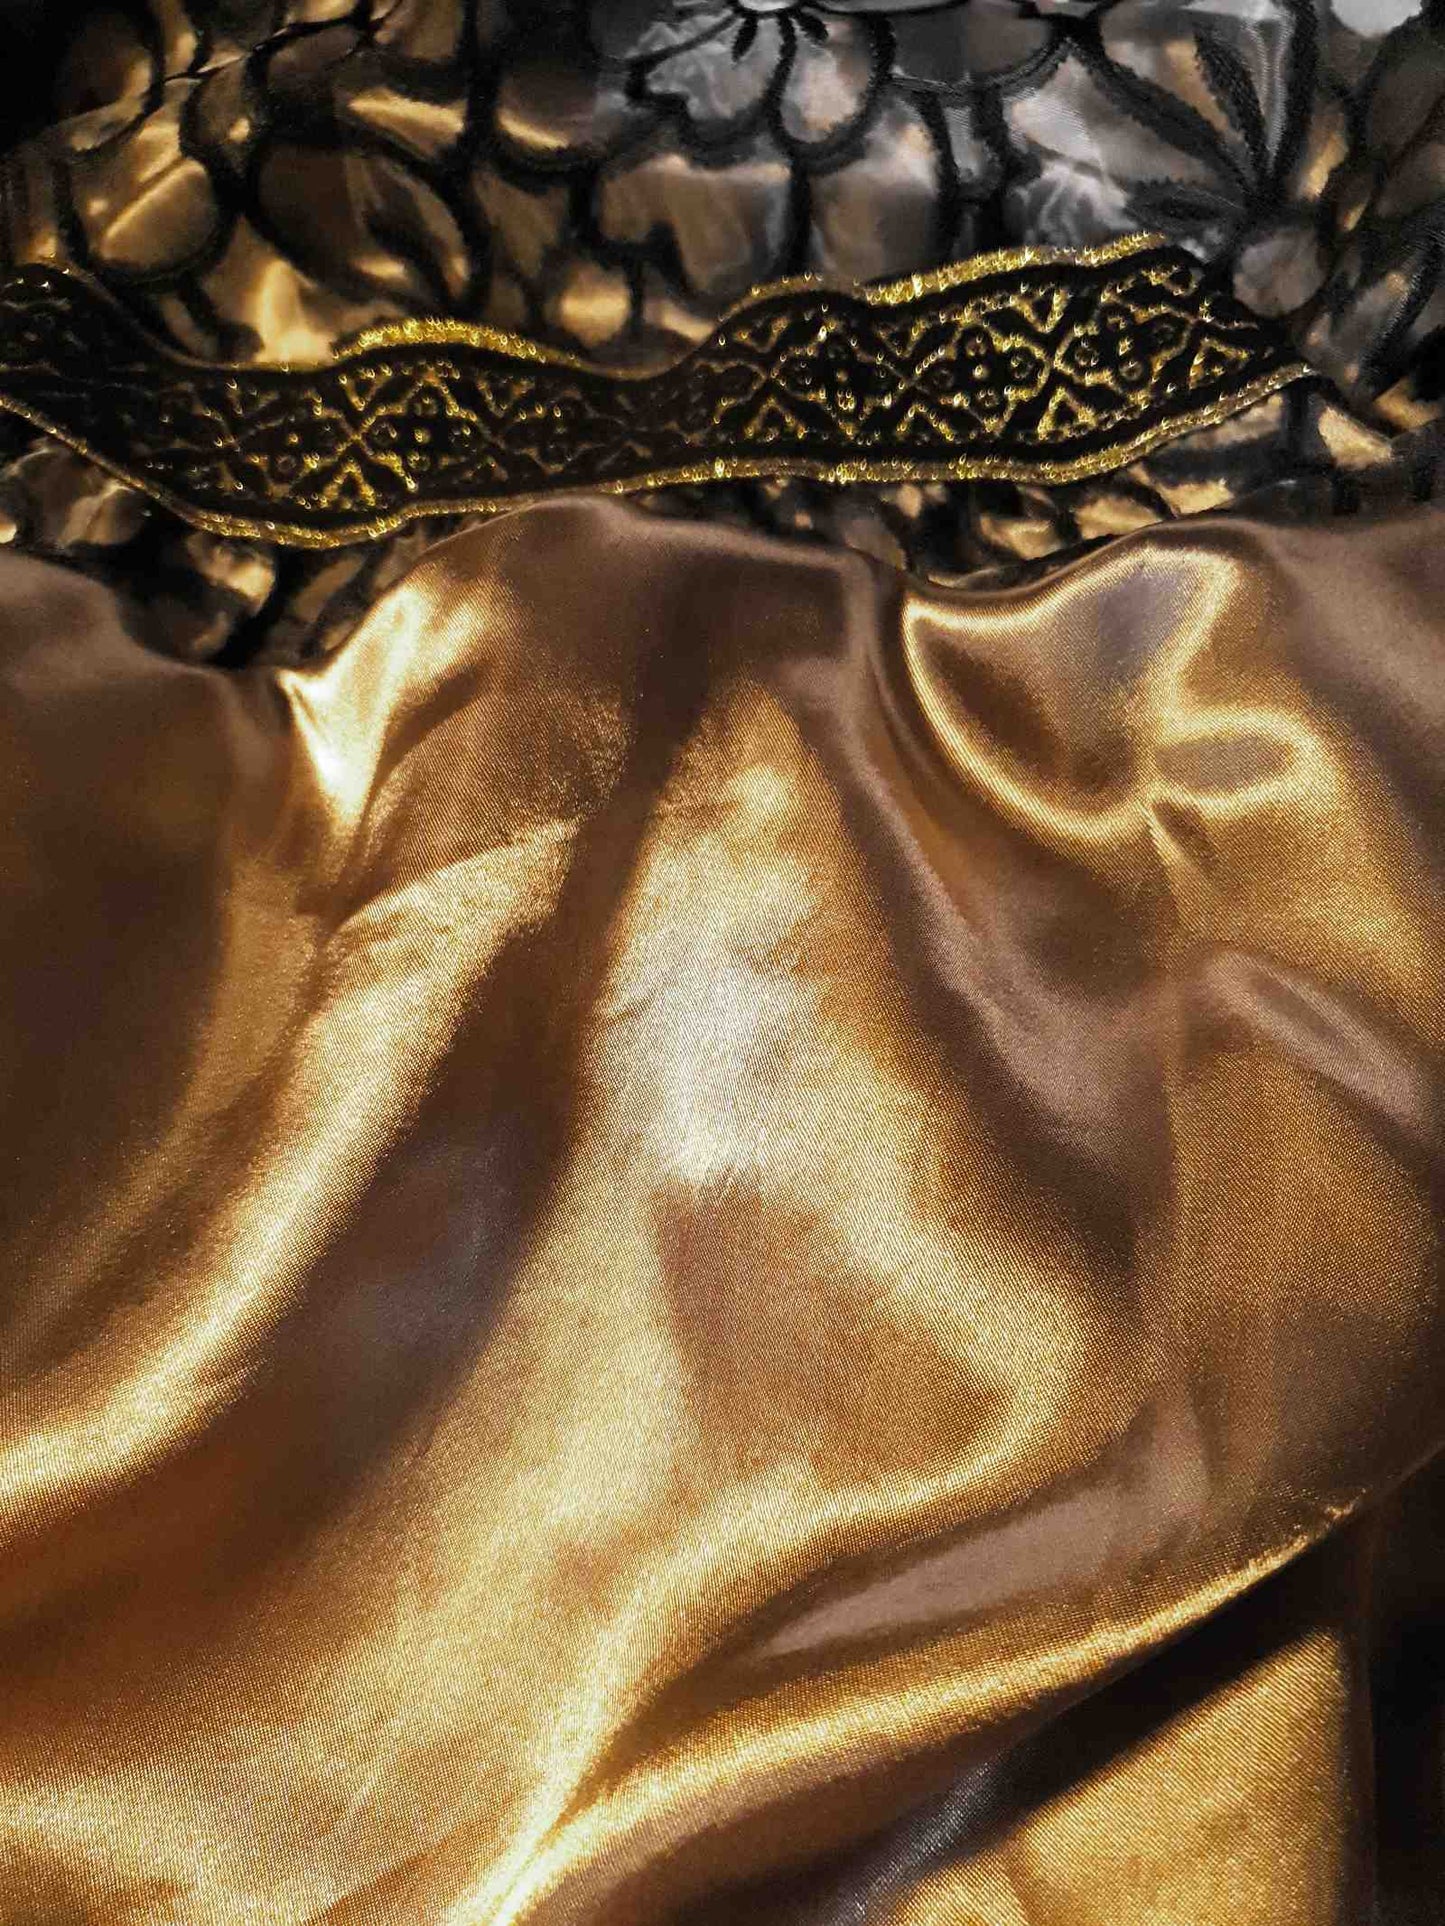 Elegant 1980s Floral Organza and Bronze Satin Layered Maxi Evening Skirt - Size 8/10/12